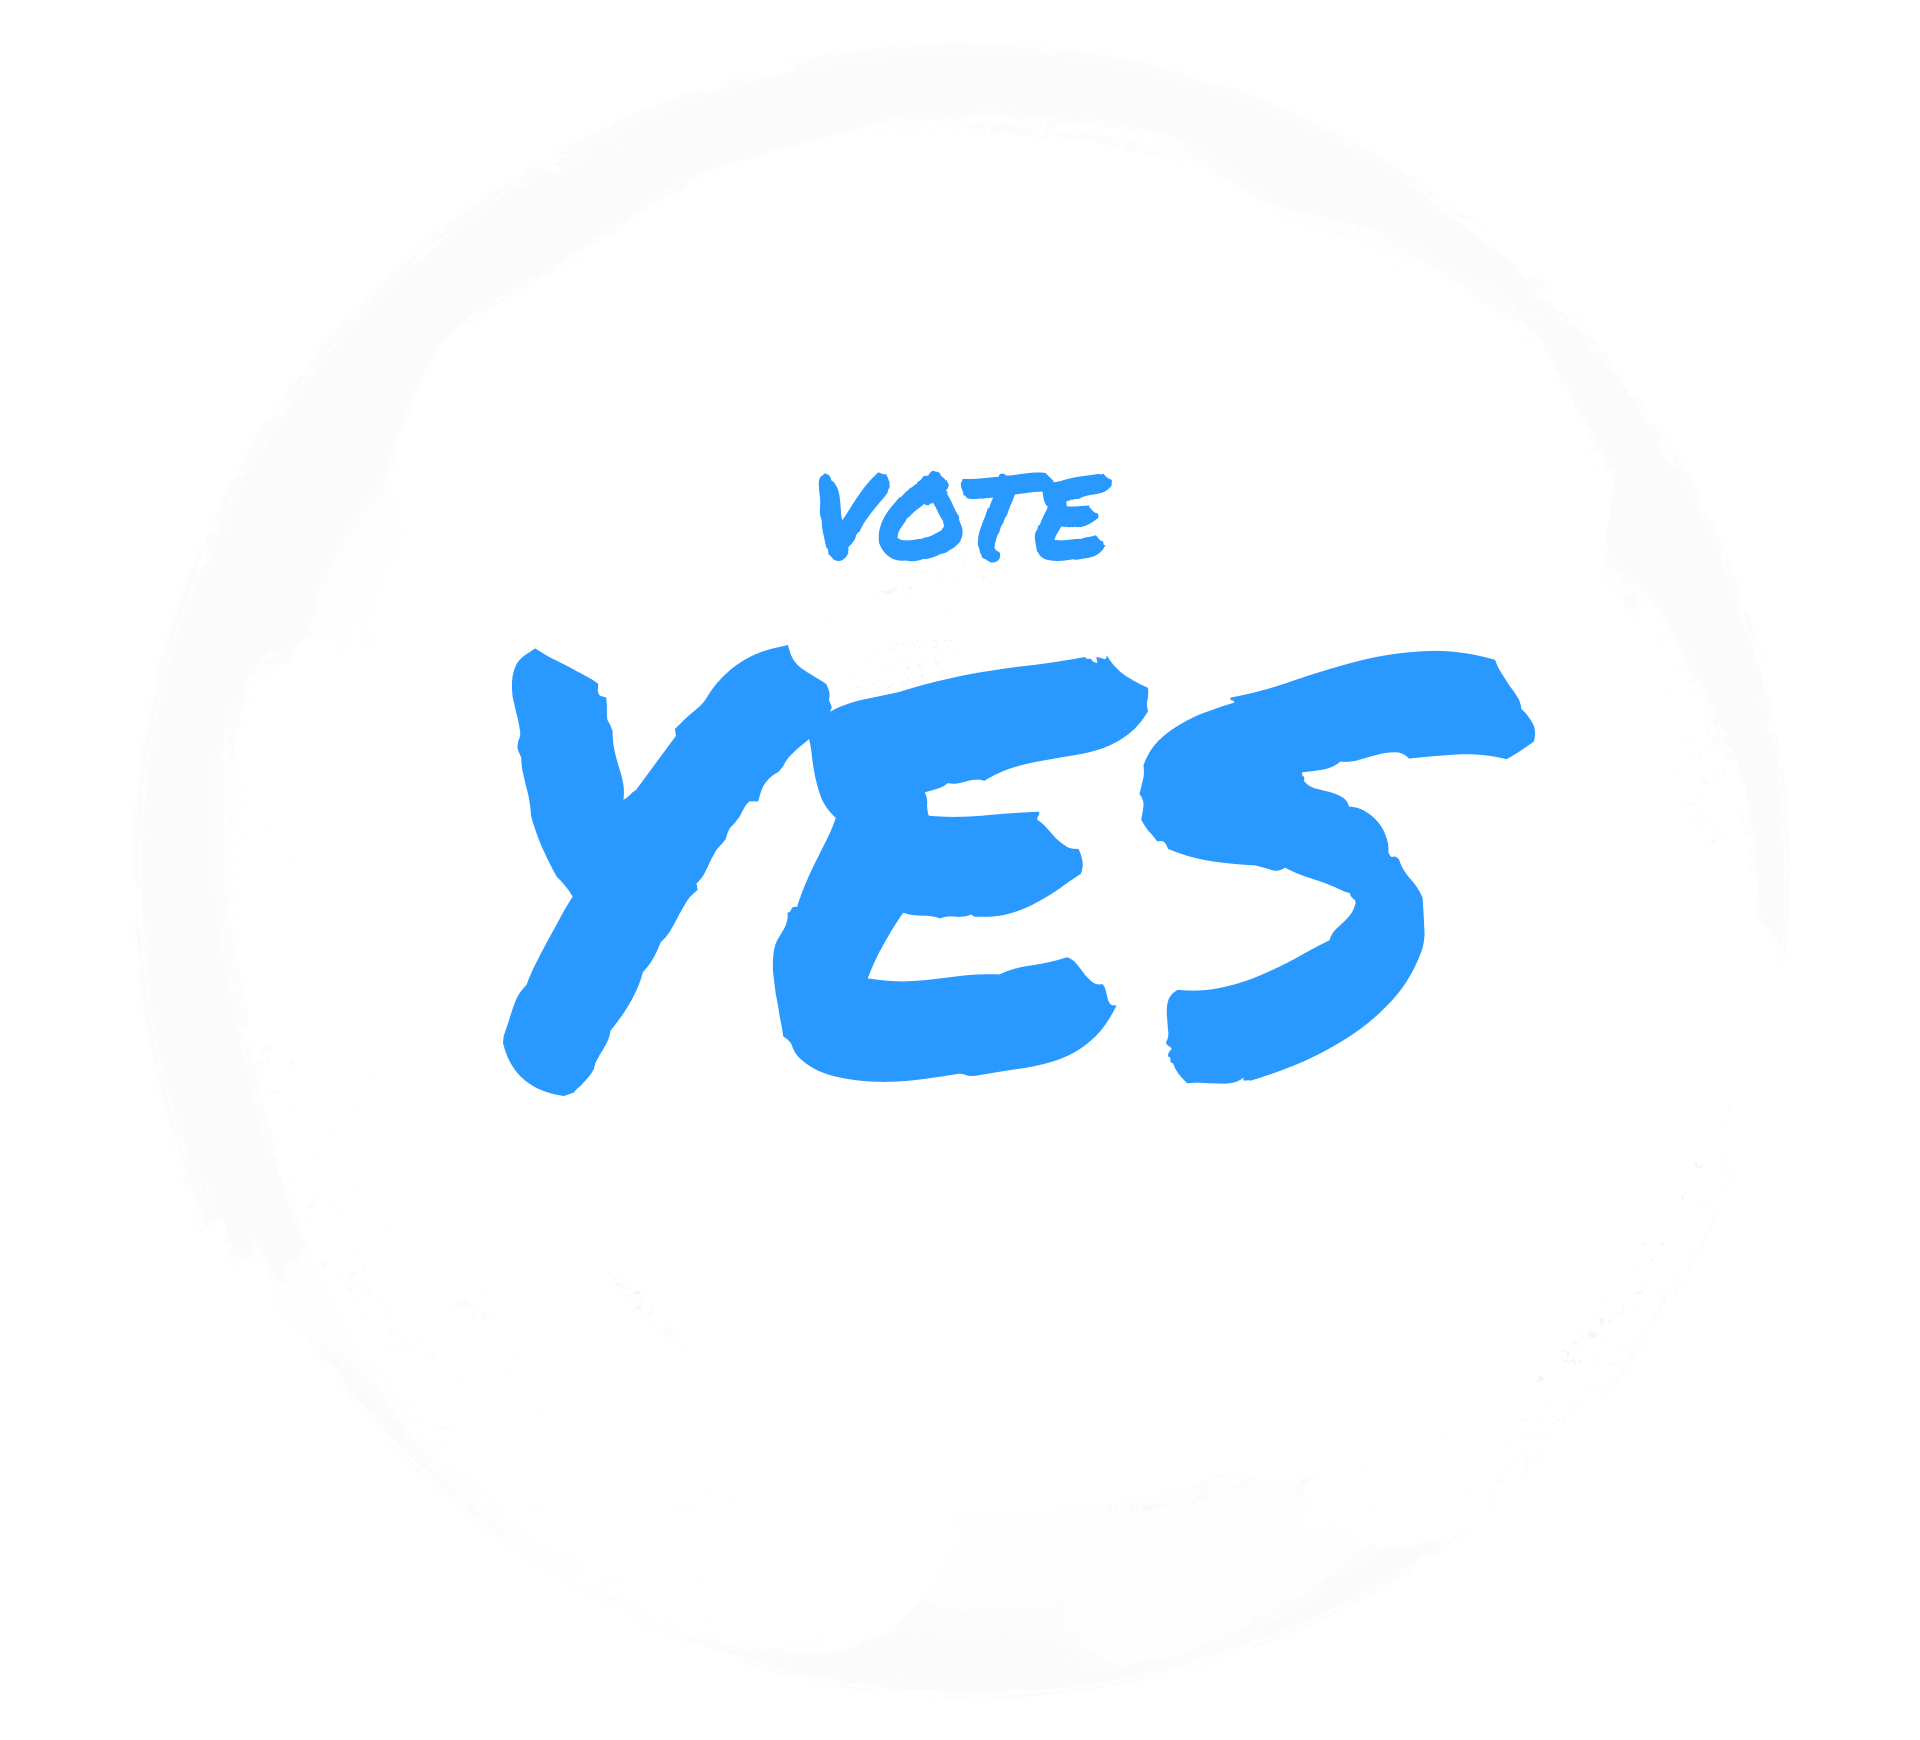 Vote Yes